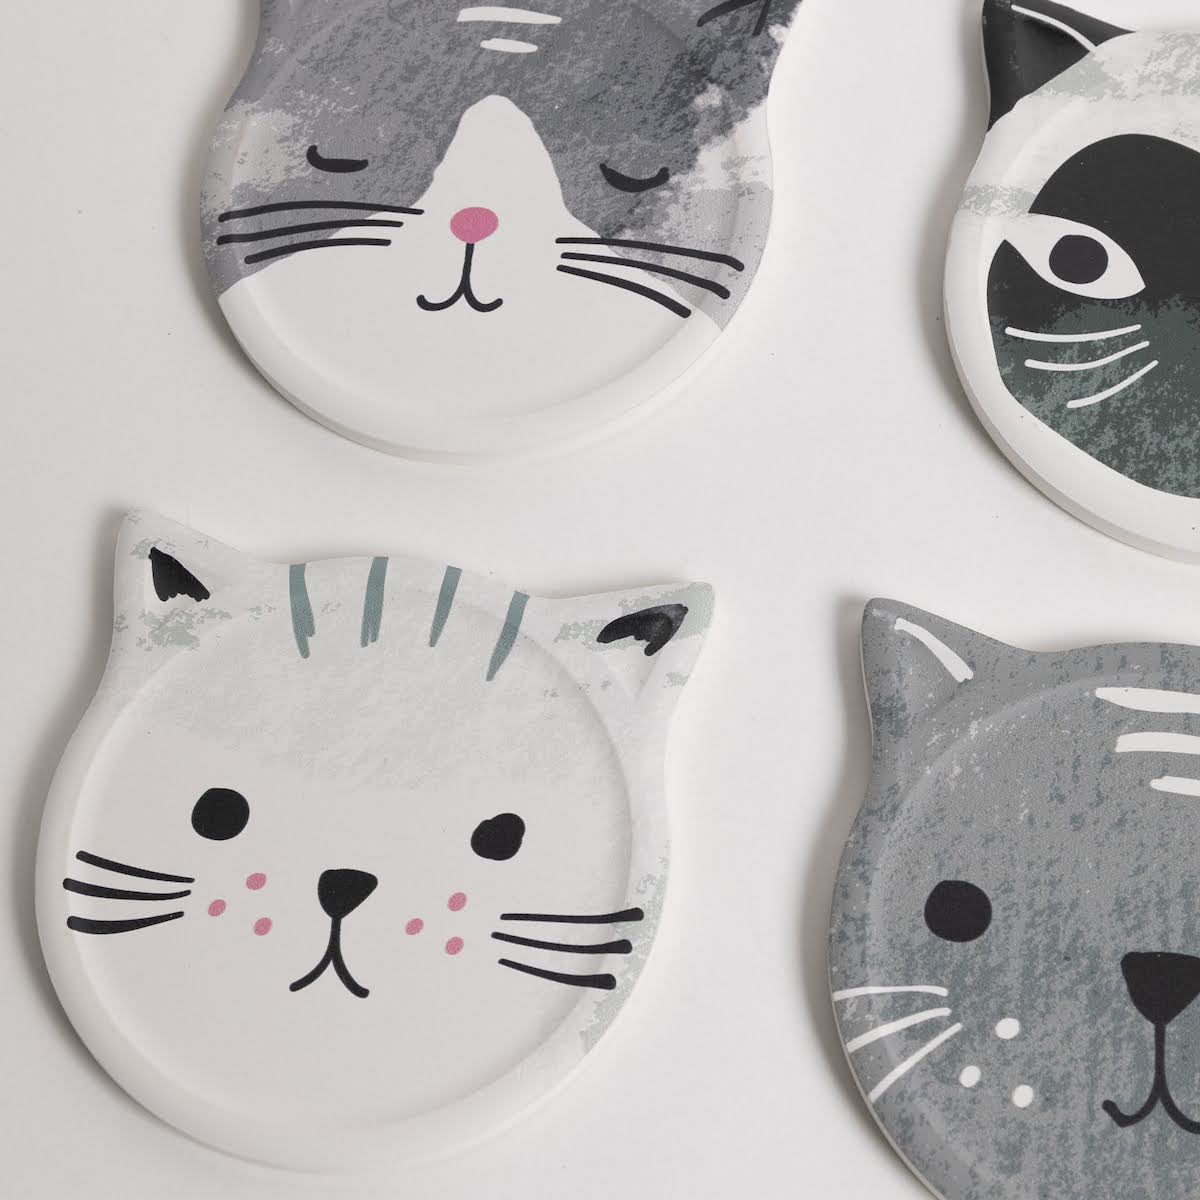 Soak Up Cat Meow Coasters - P I C N I C 